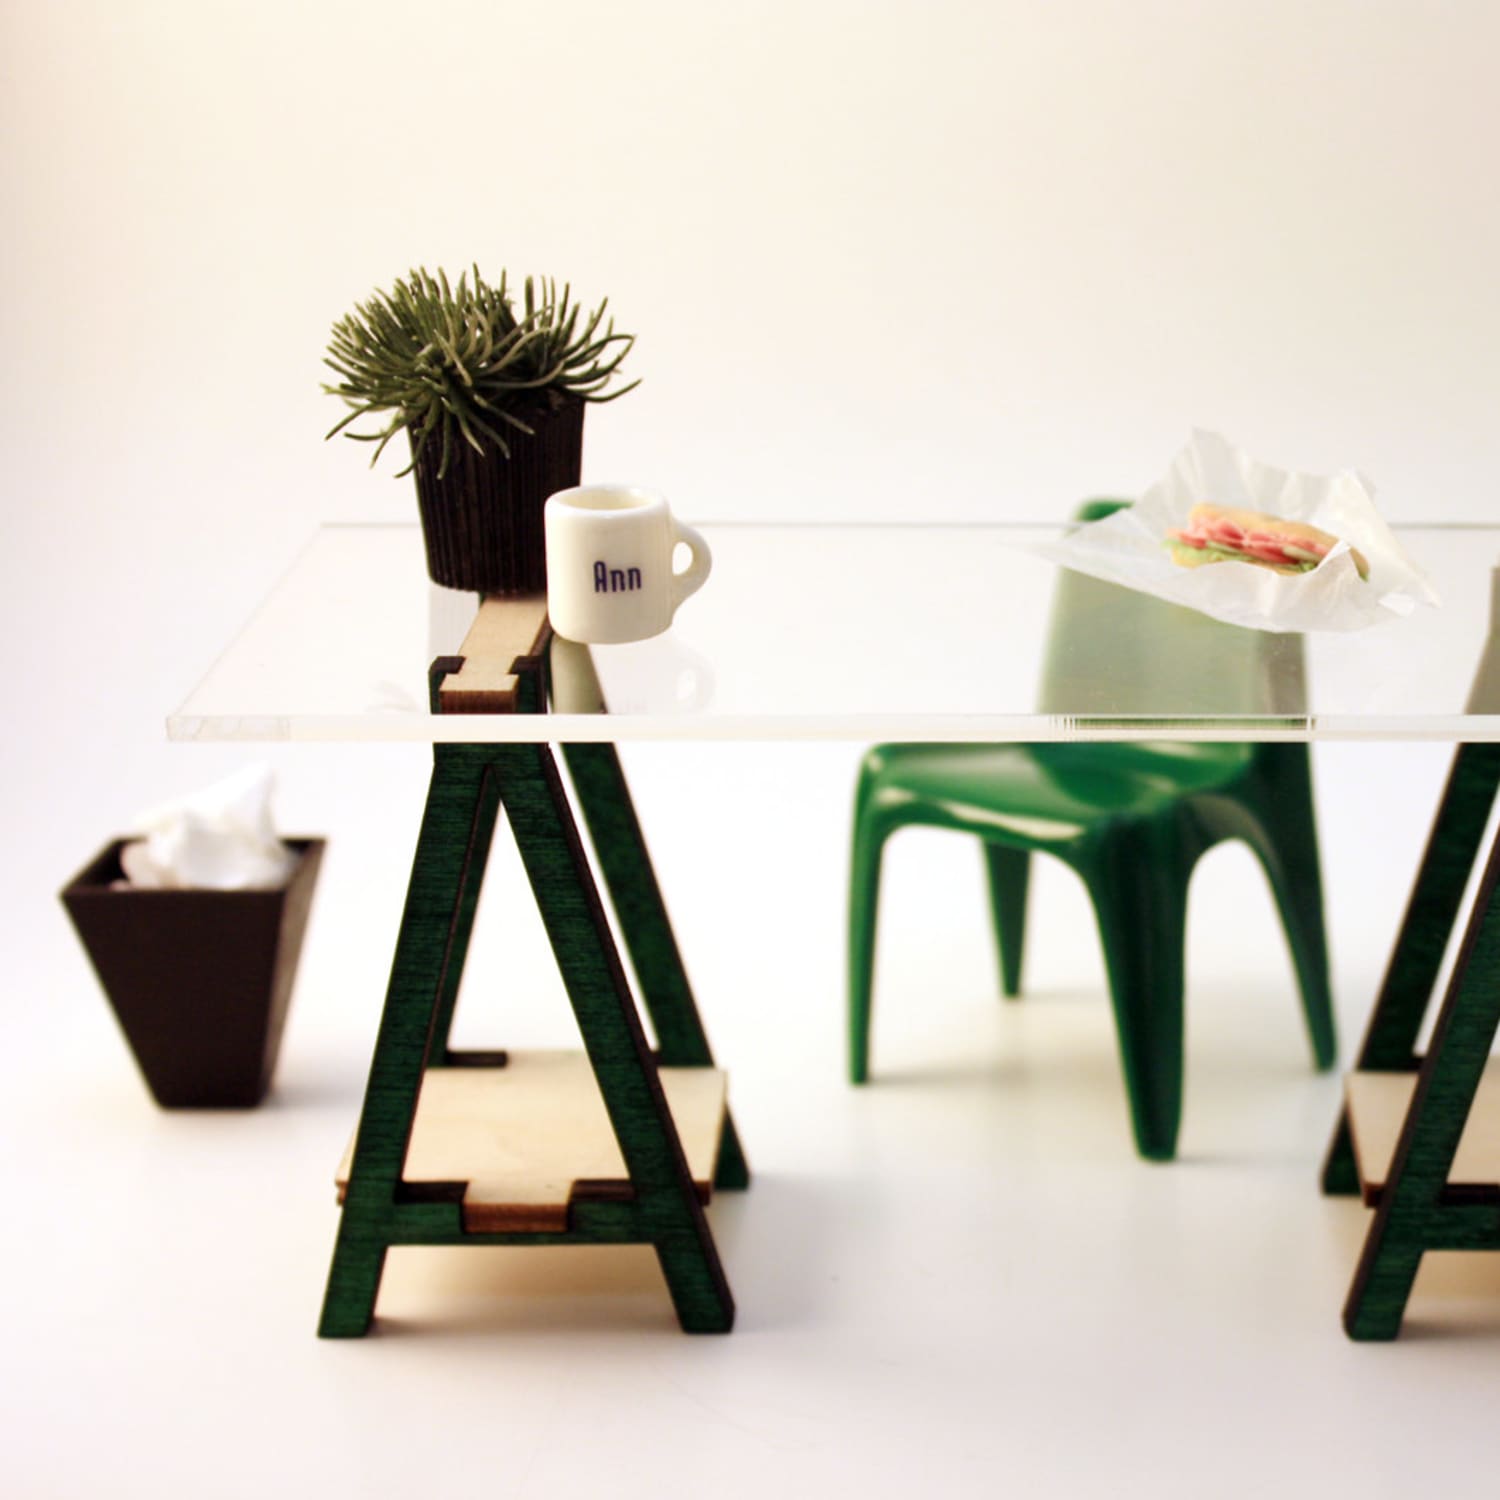 Ikea Mini Dollhouse Furniture Diy Project Ideas Apartment Therapy